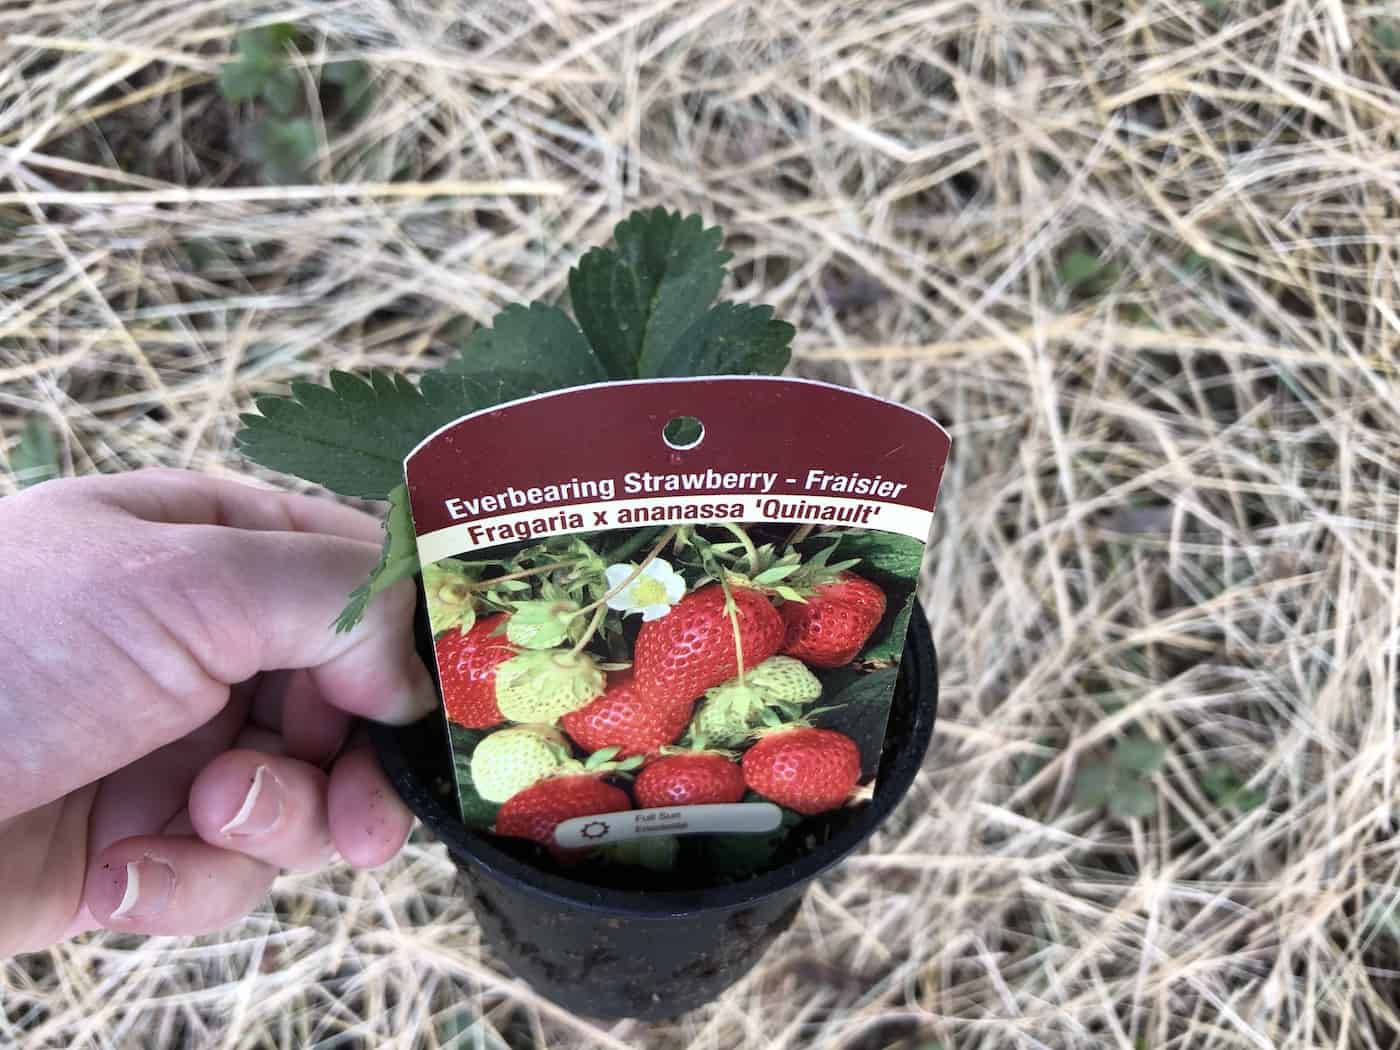 Planting quinault strawberries